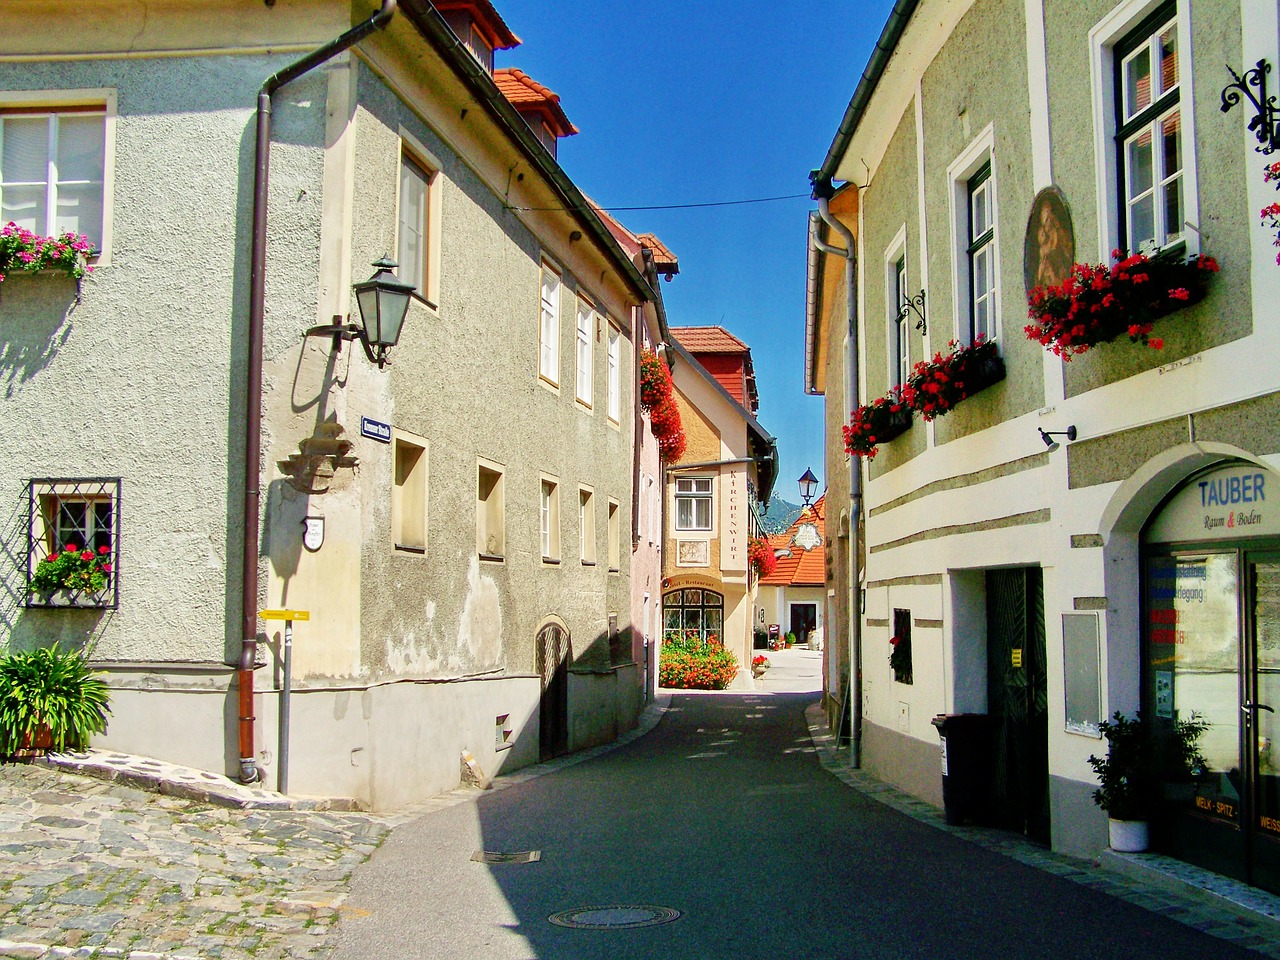 Gatvės Duomenys, Weissen Kirchen, Žemutinė Austrija, Nemokamos Nuotraukos,  Nemokama Licenzija